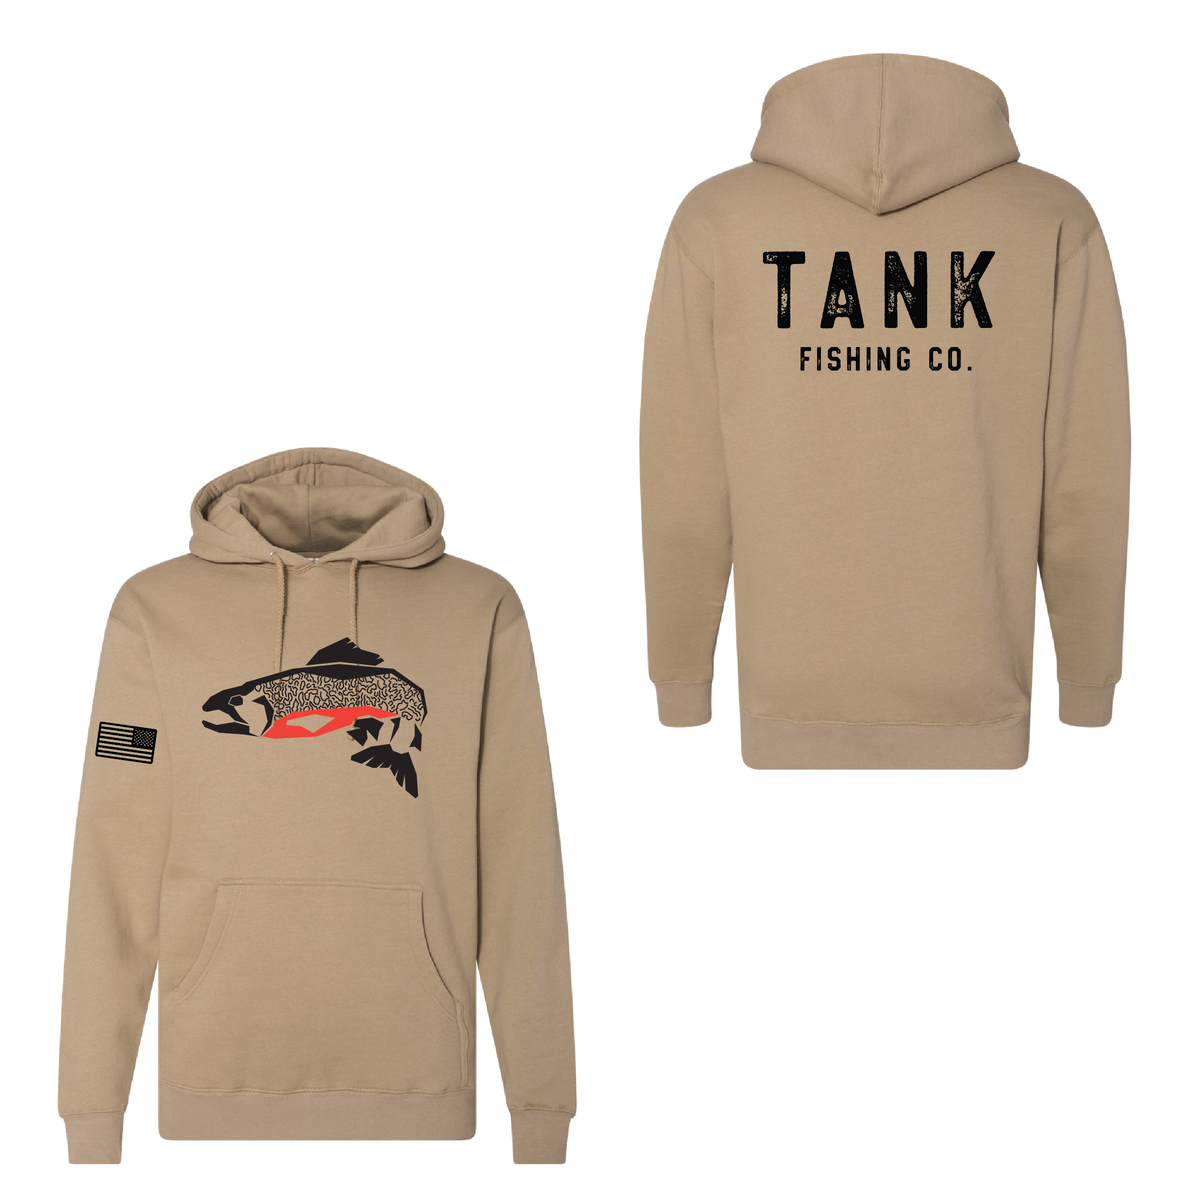 Men's Tops, Hoodies & Tanks for Fishing